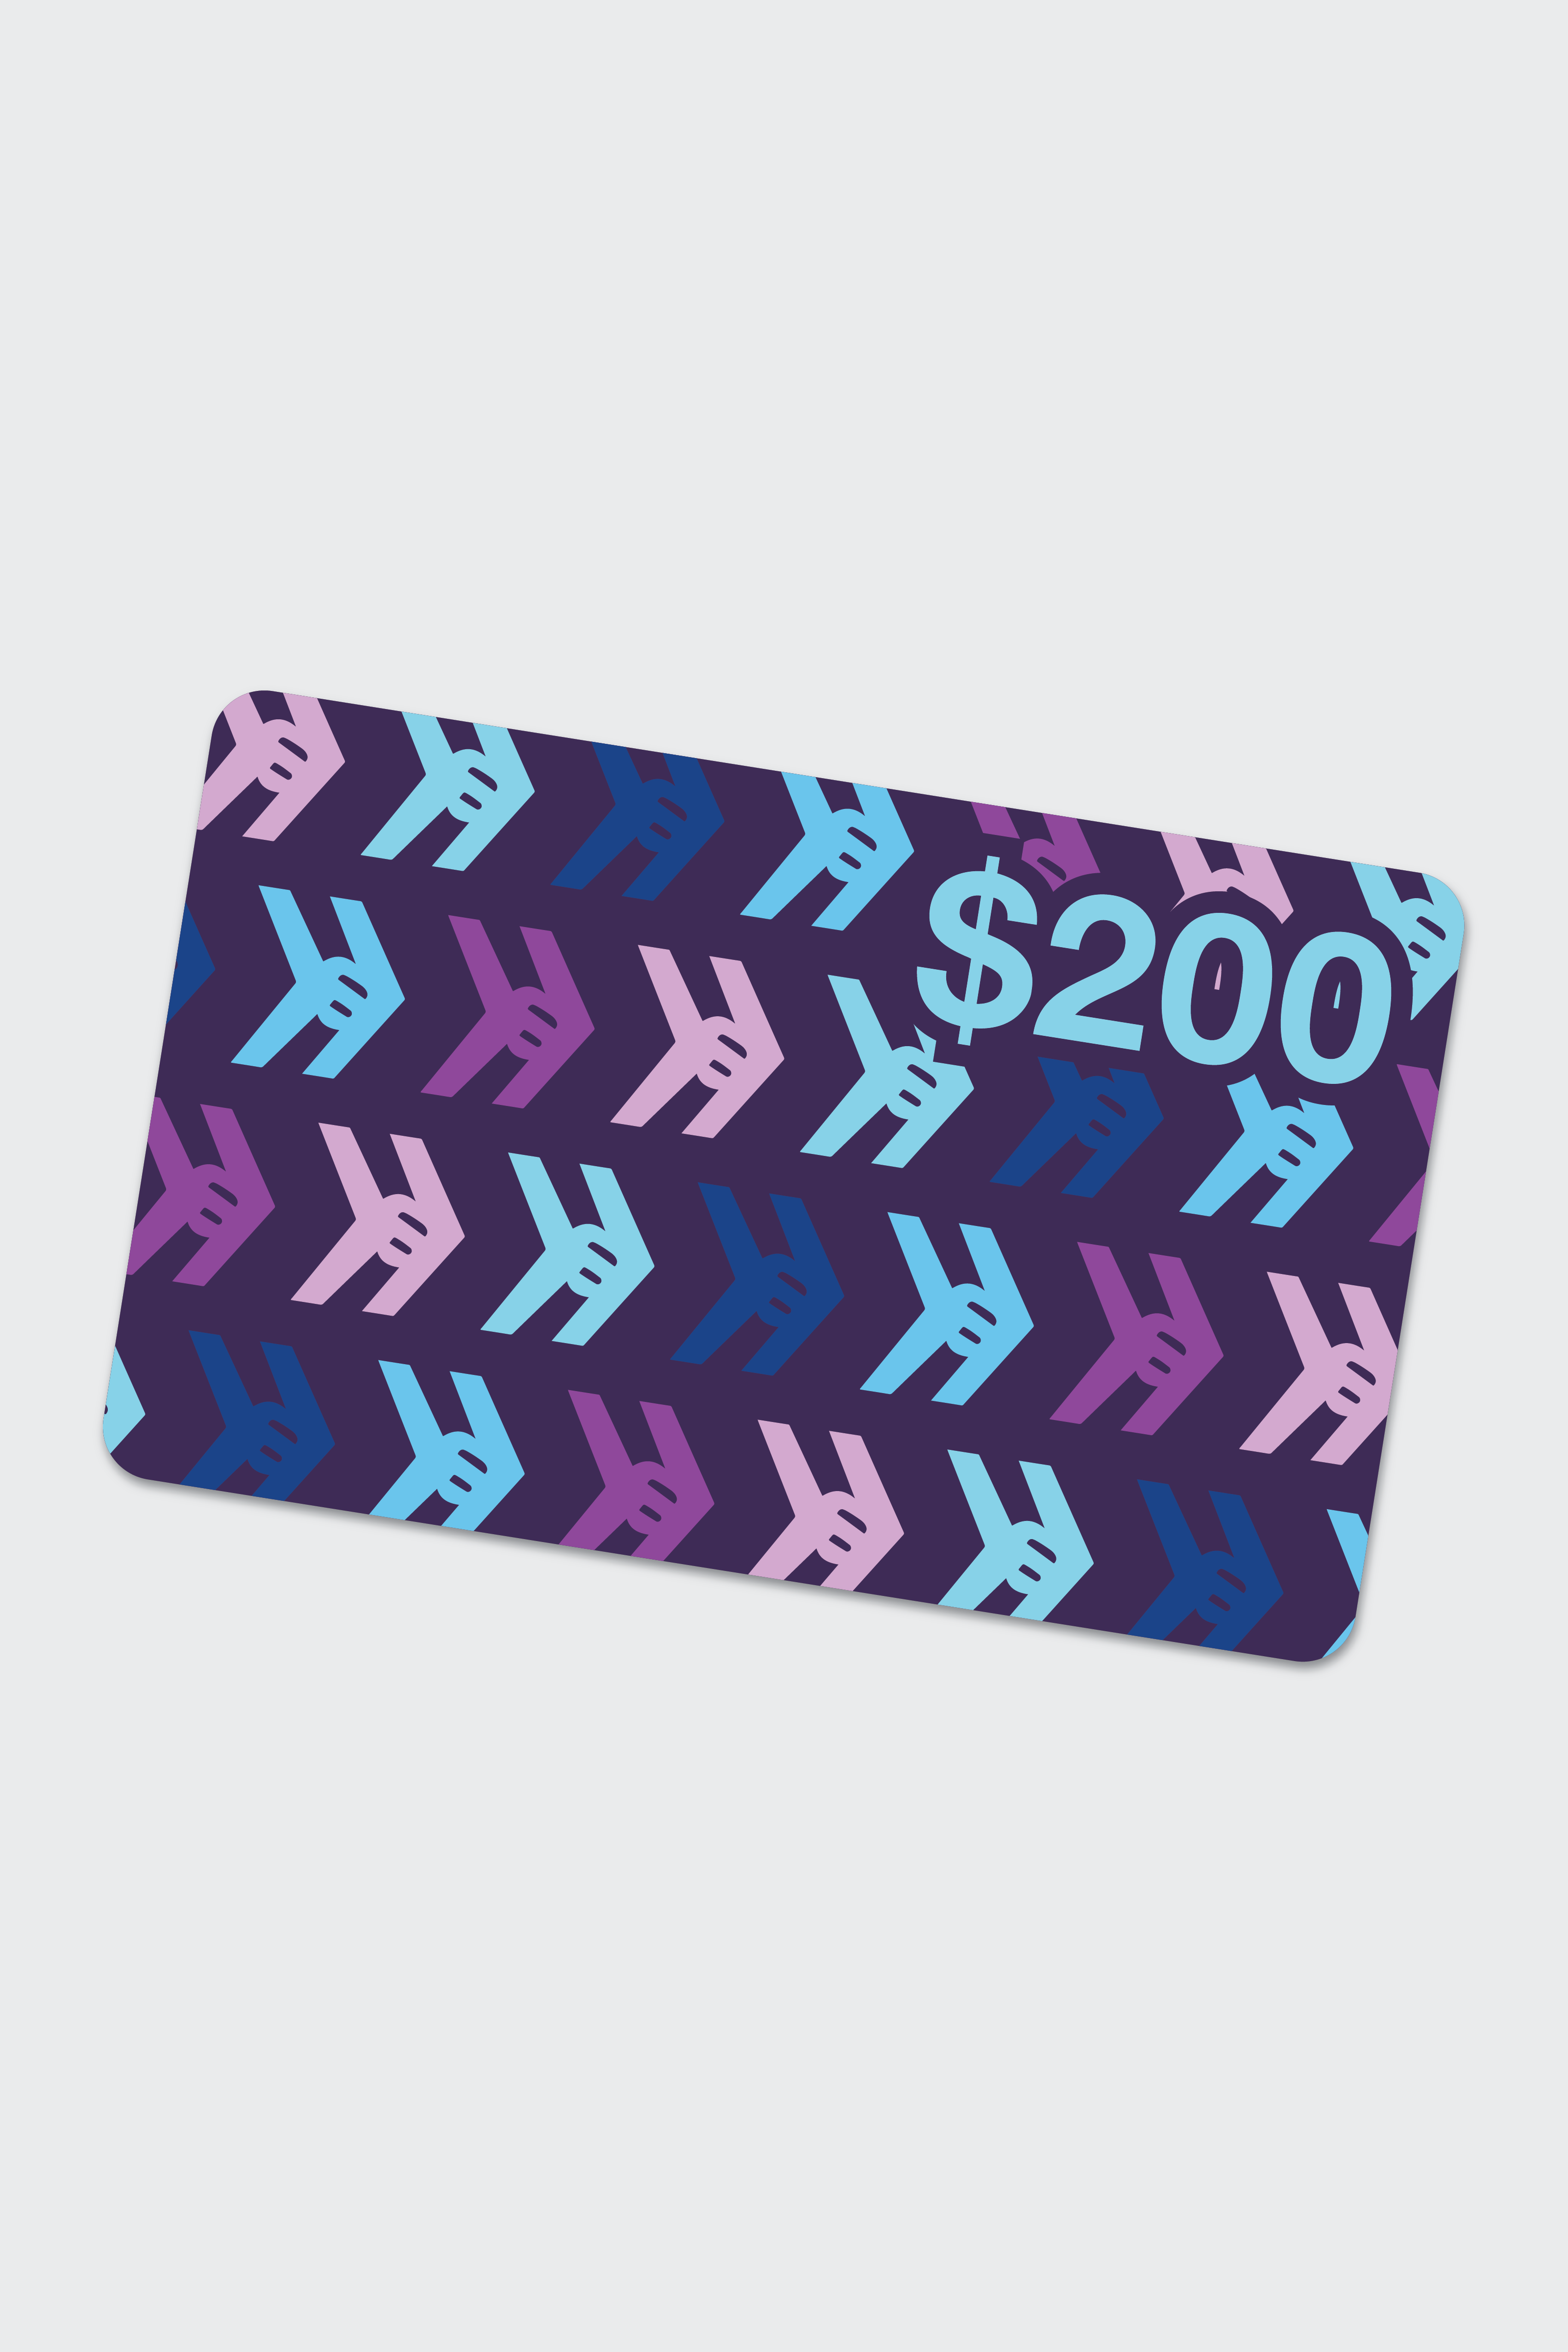 $200 Smosh Digital Gift Card